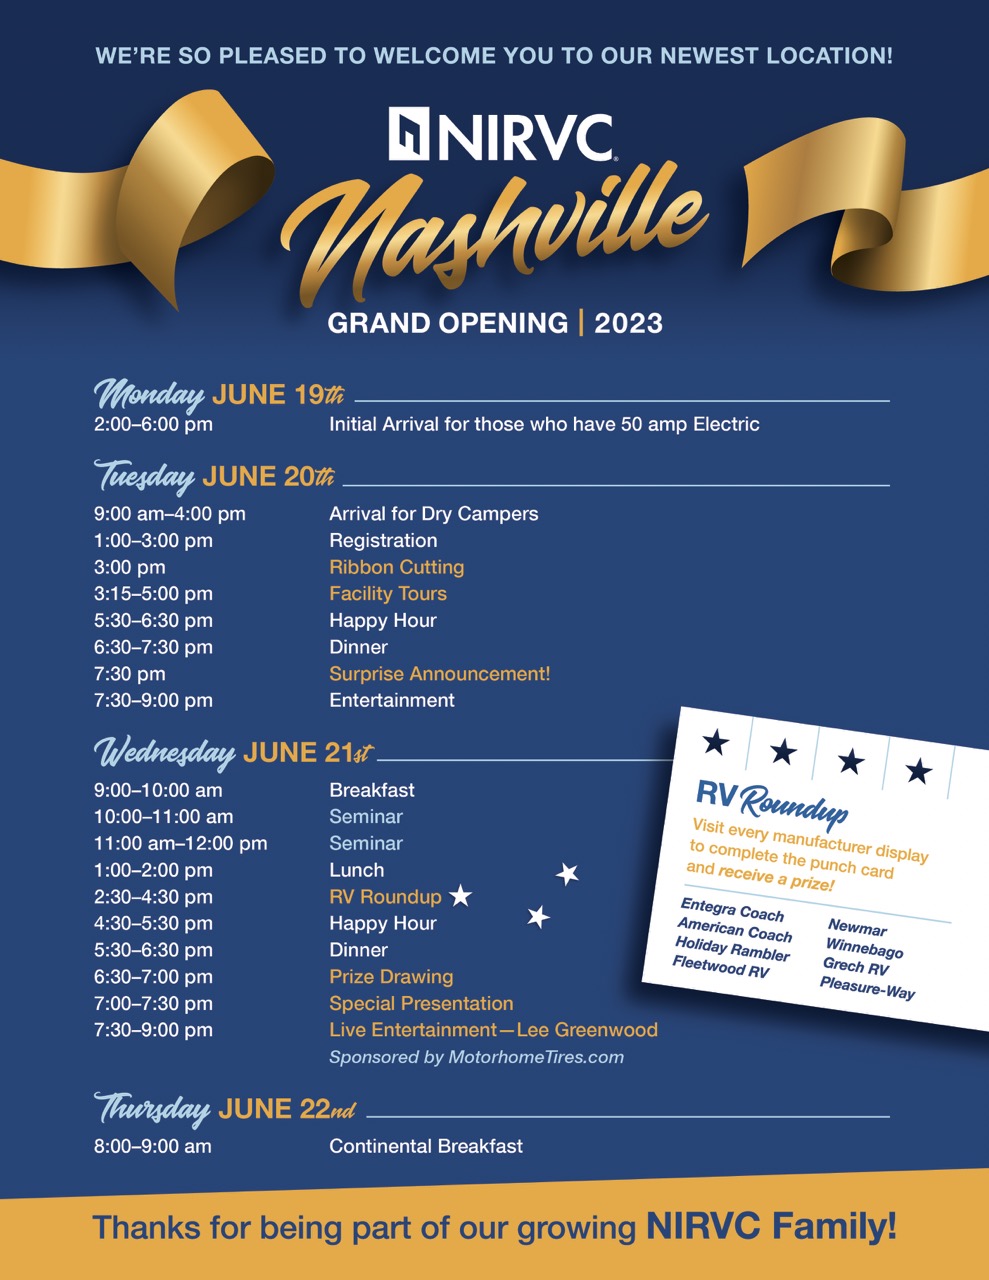 NIRVC Nashville Grand Opening Itinerary